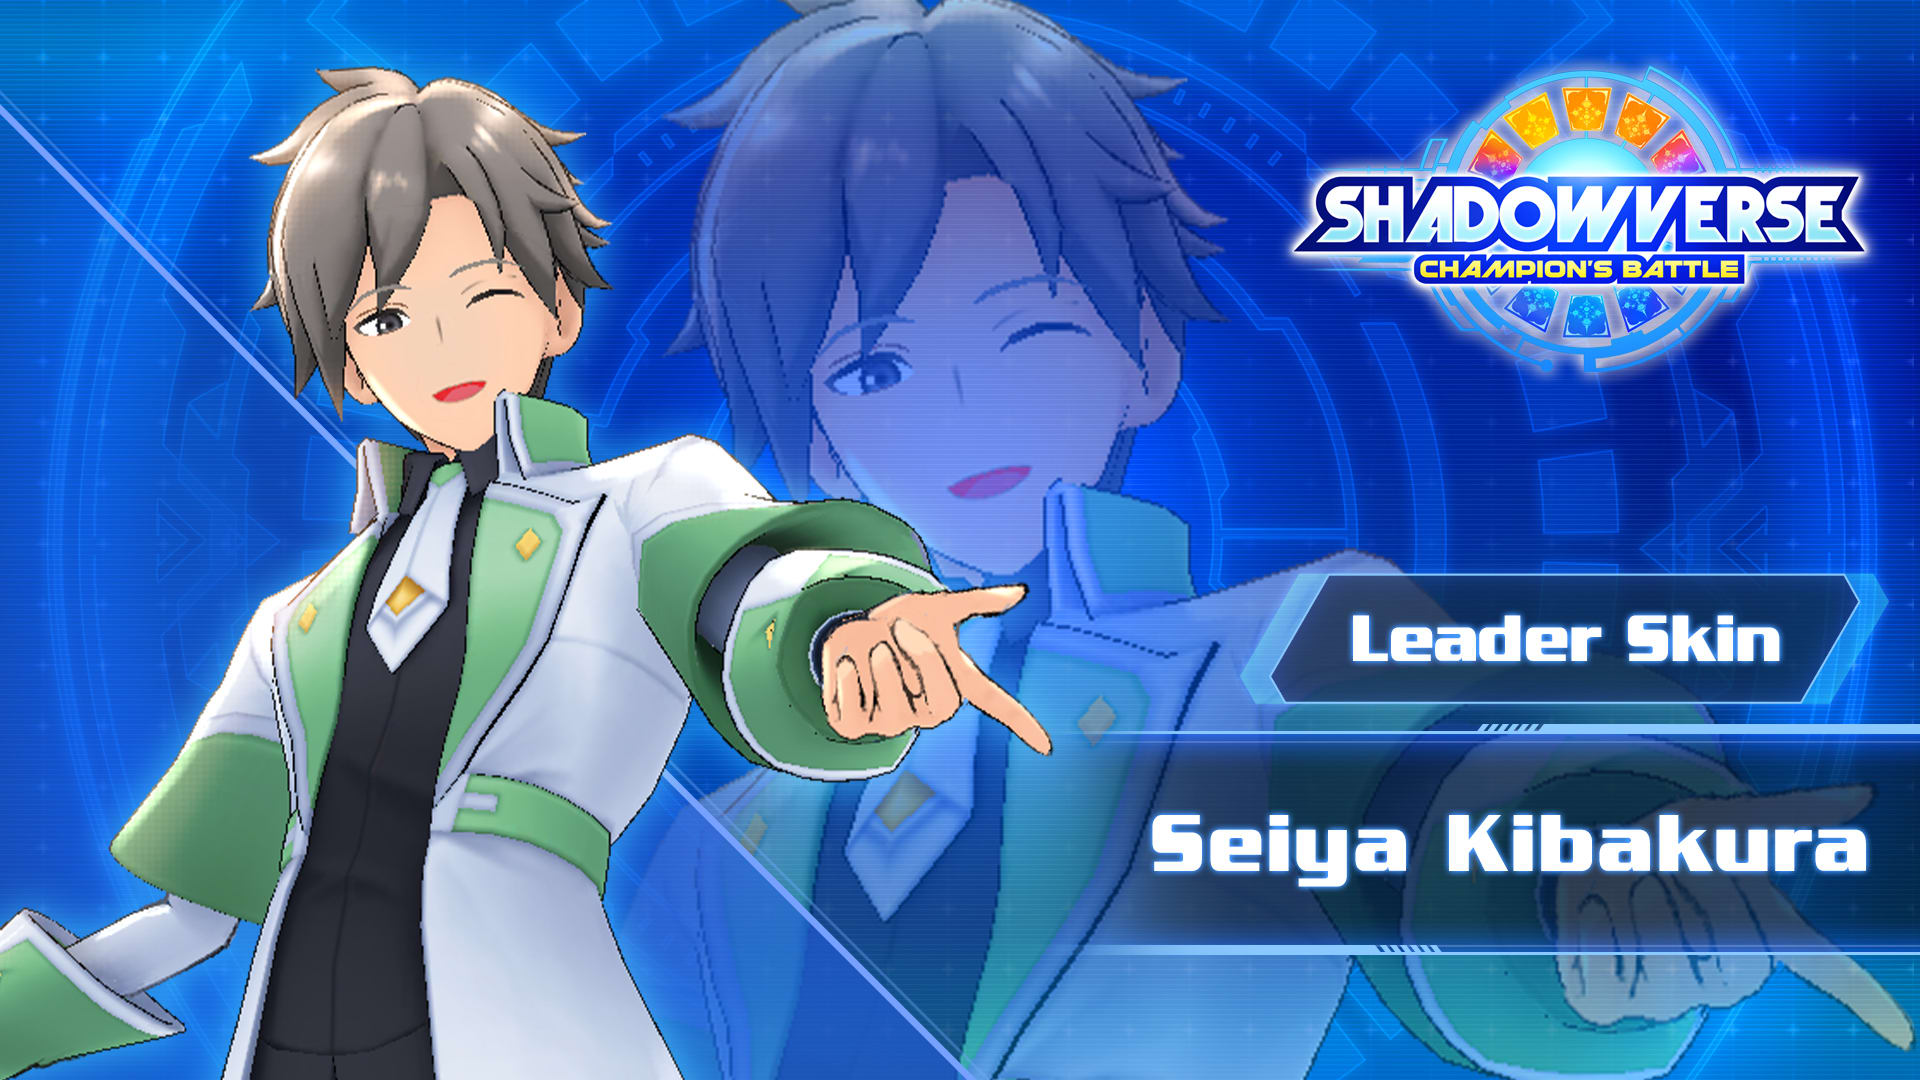 Leader Skin: "Seiya Kibakura"